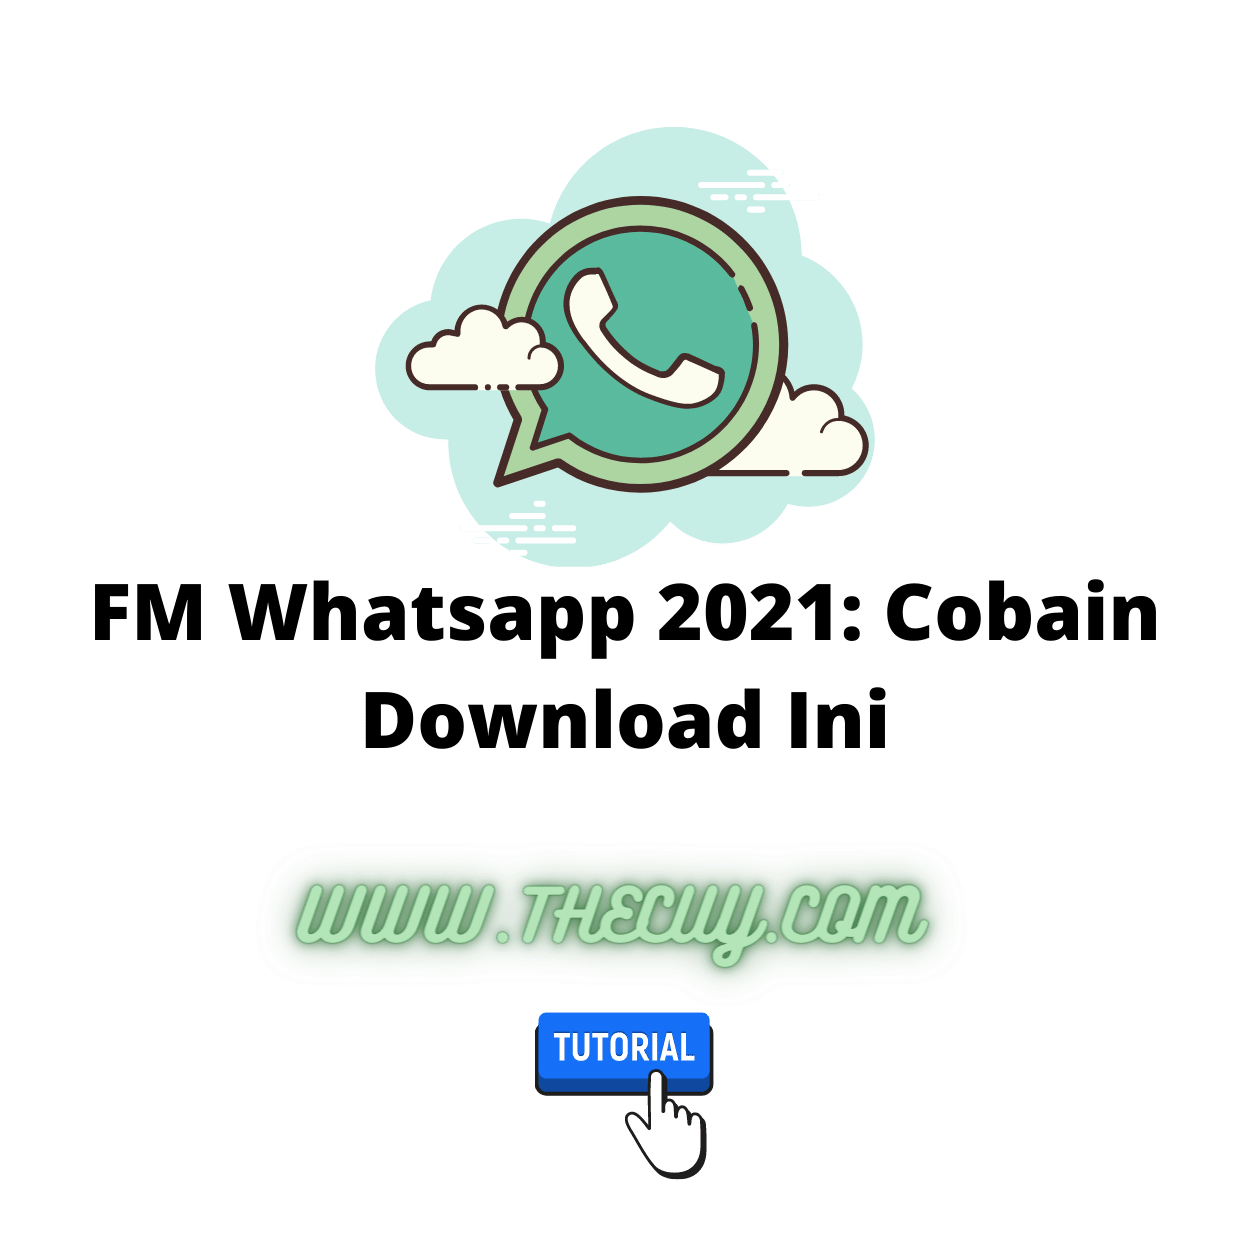 FM Whatsapp 2021: Cobain Download Ini